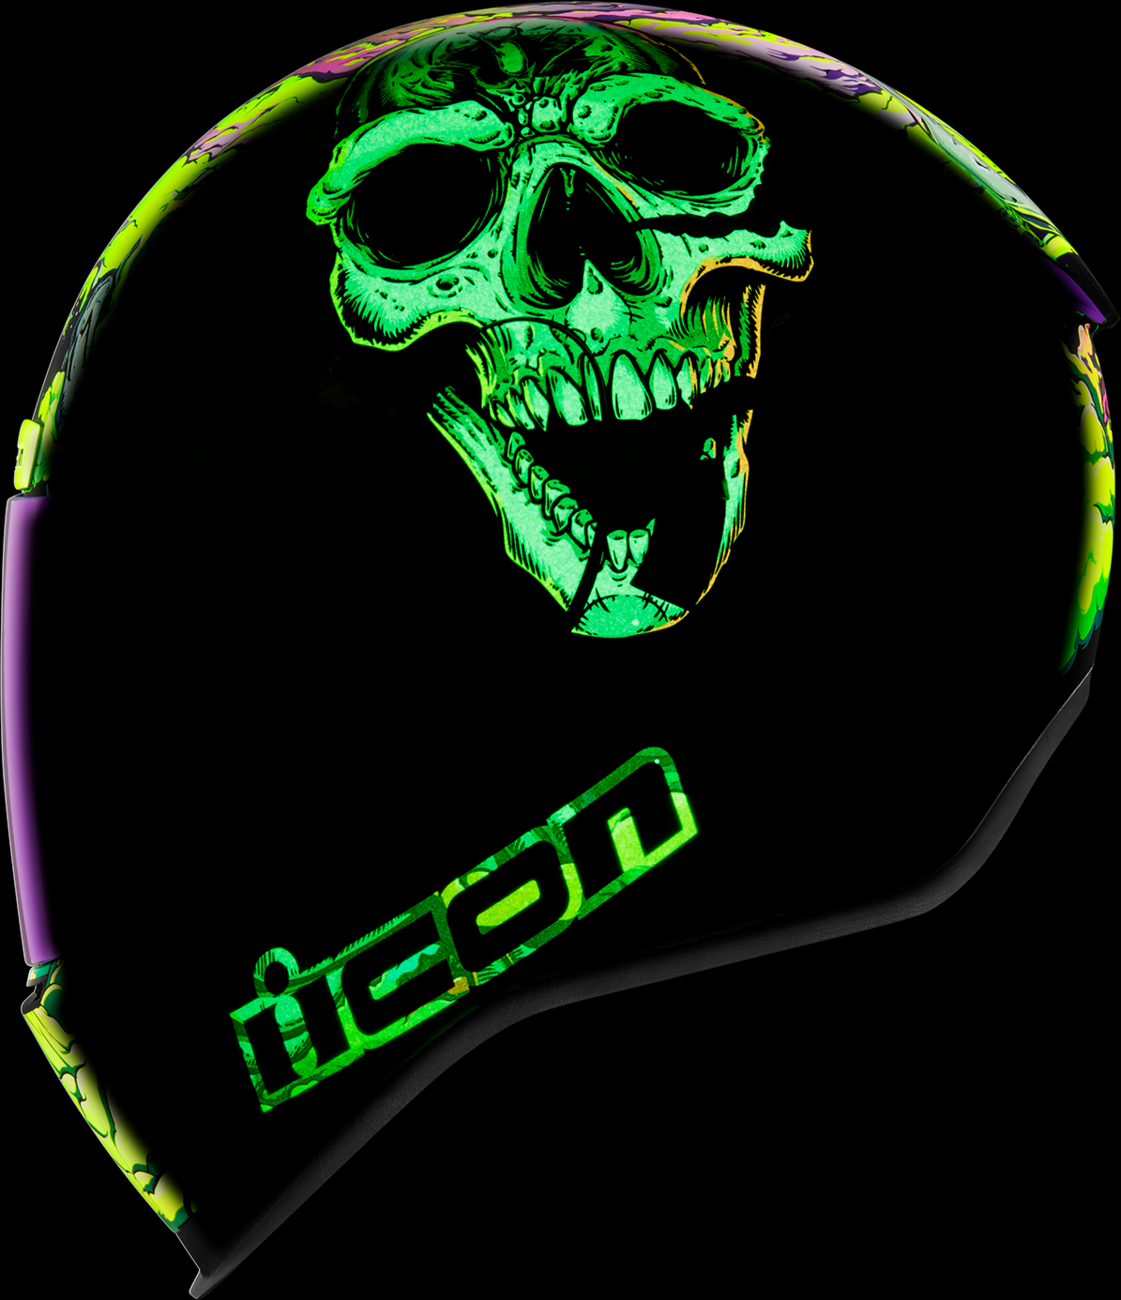 ICON Airform™ Helmet - Hippy Dippy - Purple - Large 0101-16027